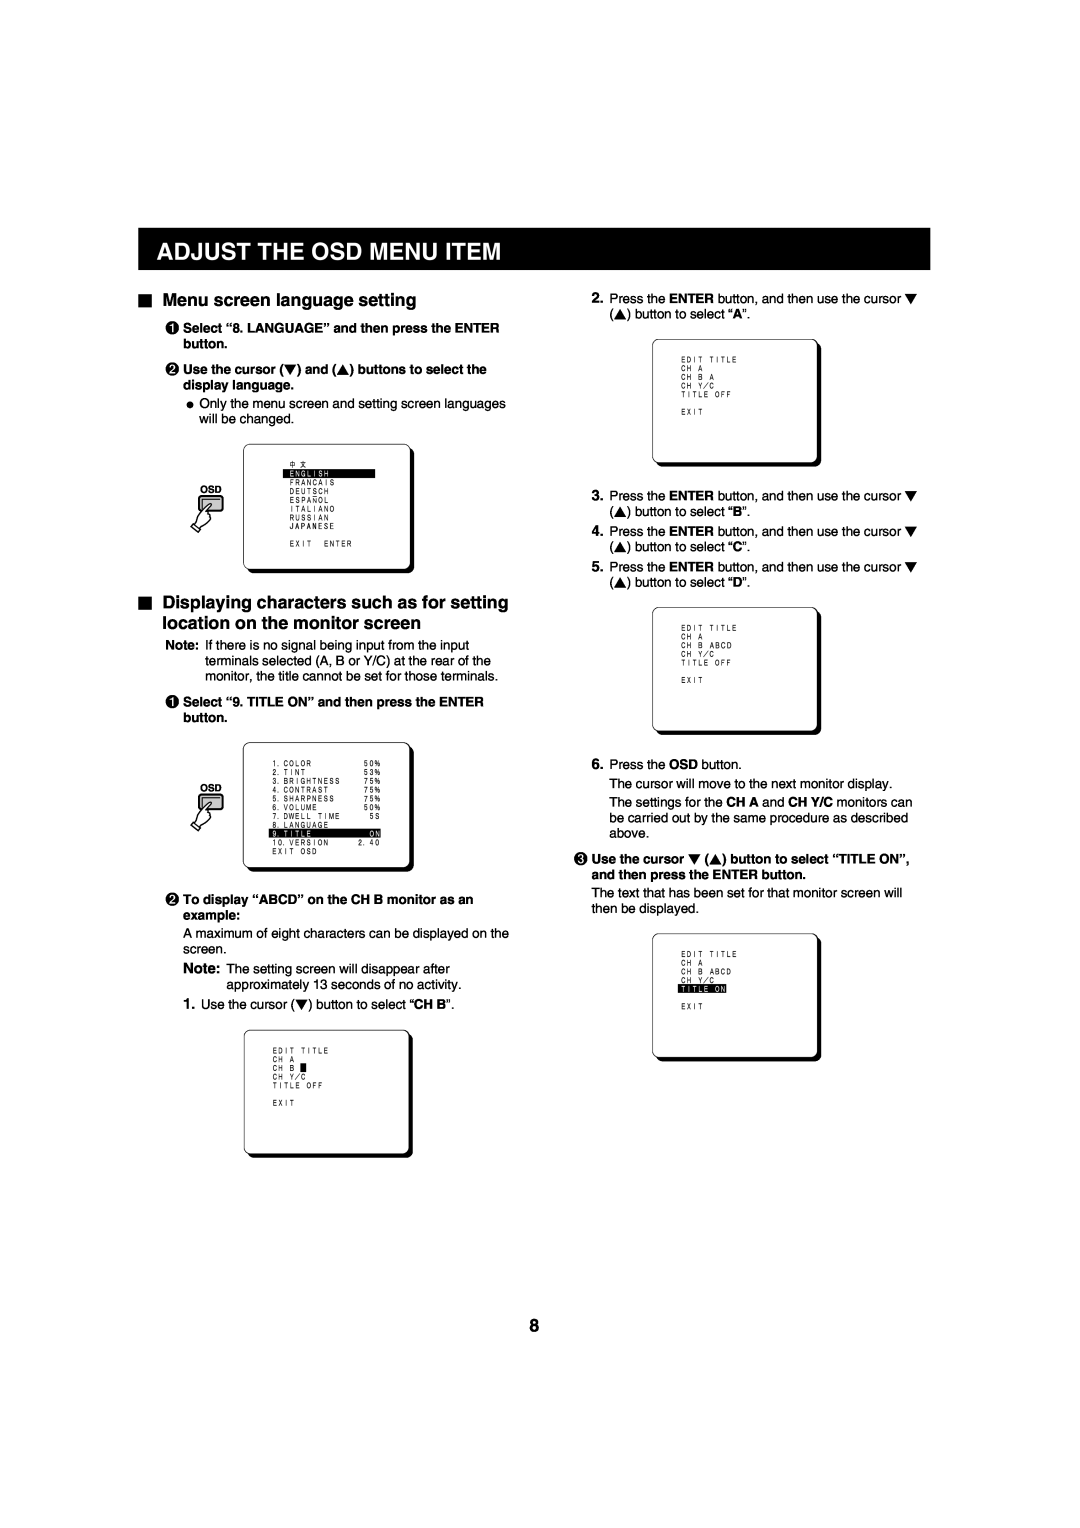 Sanyo VMC-8620 instruction manual Menu screen language setting, Adjust The Osd Menu Item 